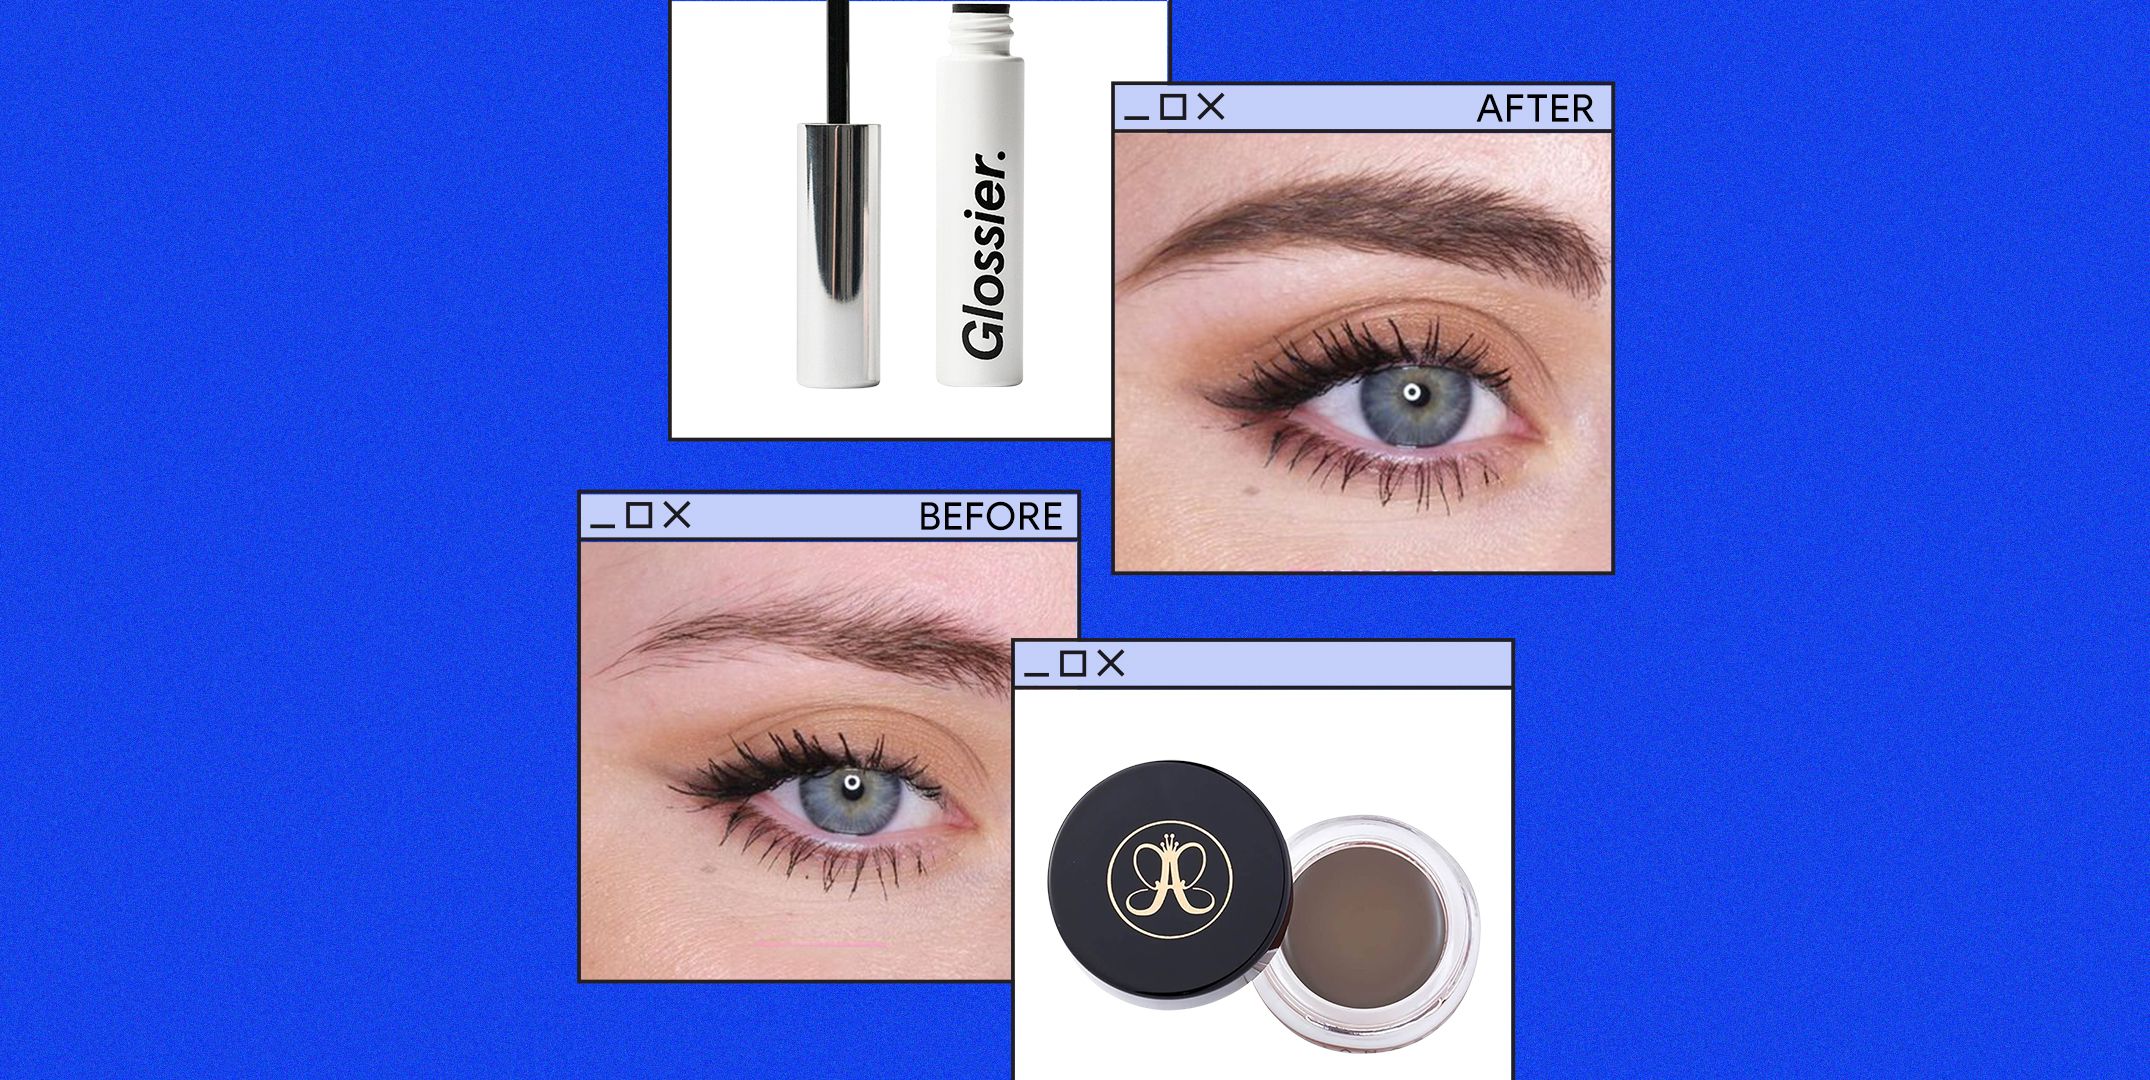 1pcs New 3 In 1 Eyebrow Makeup Kit for Women Waterproof Brow Pencil +  Powder + Brush Black Brown Pigment Eyebrow Tool